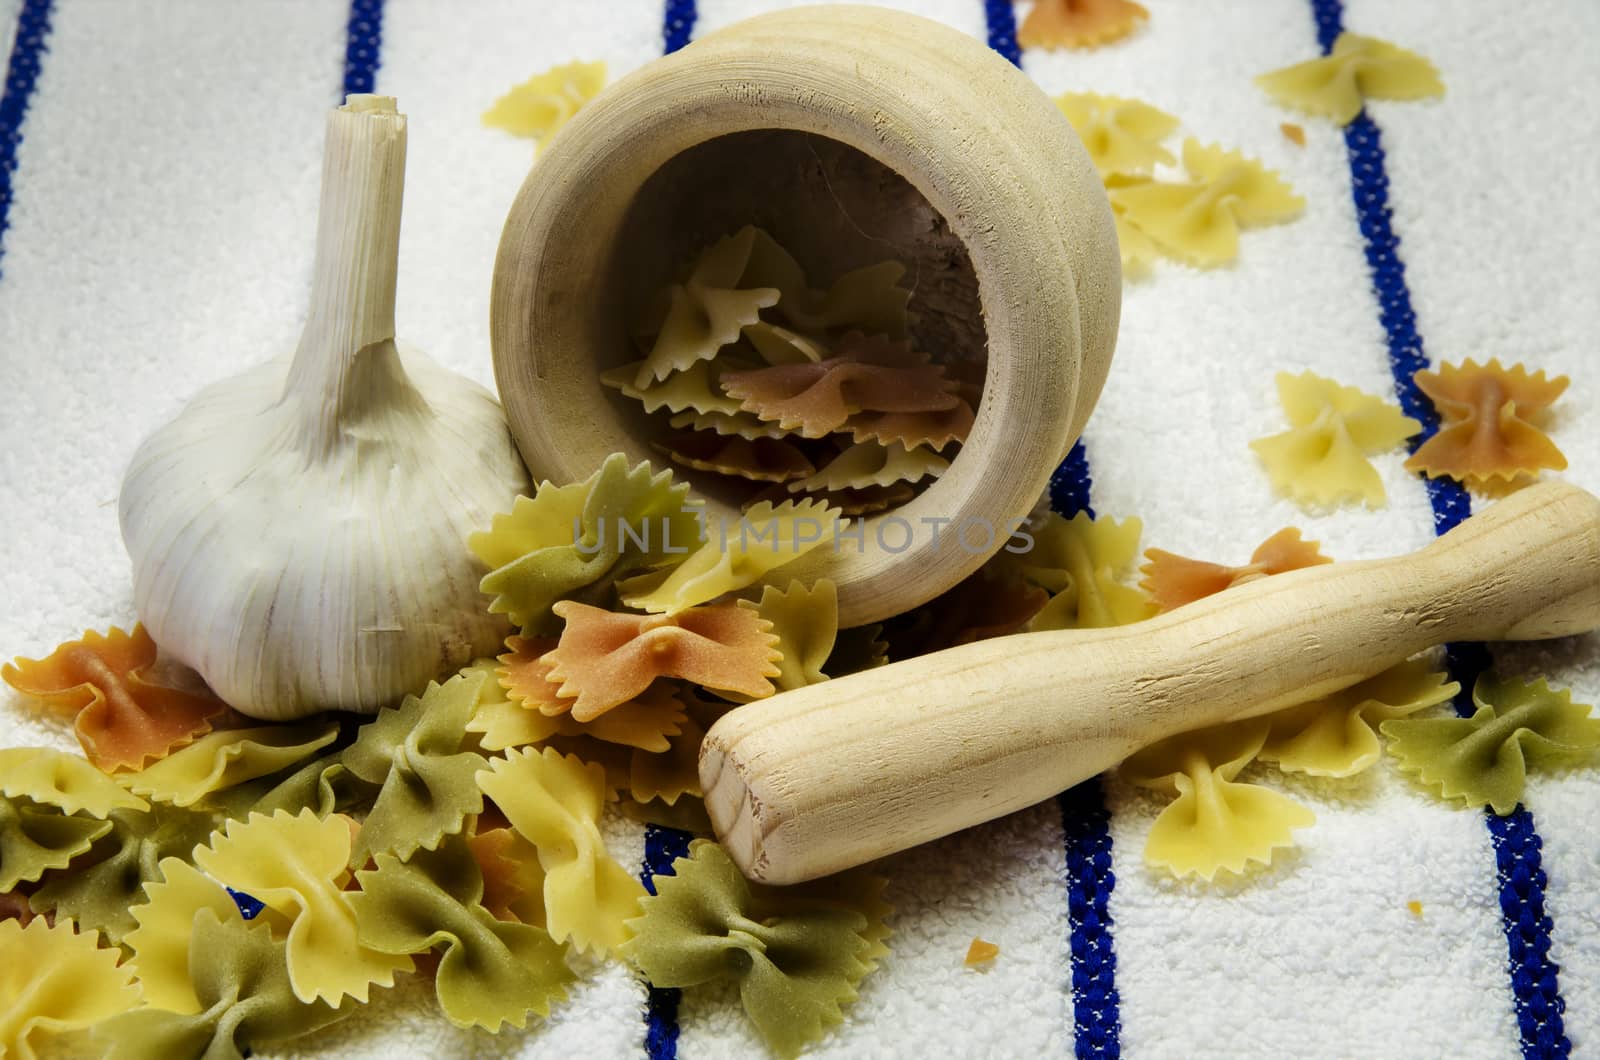 Pasta and garlic by bpardofotografia